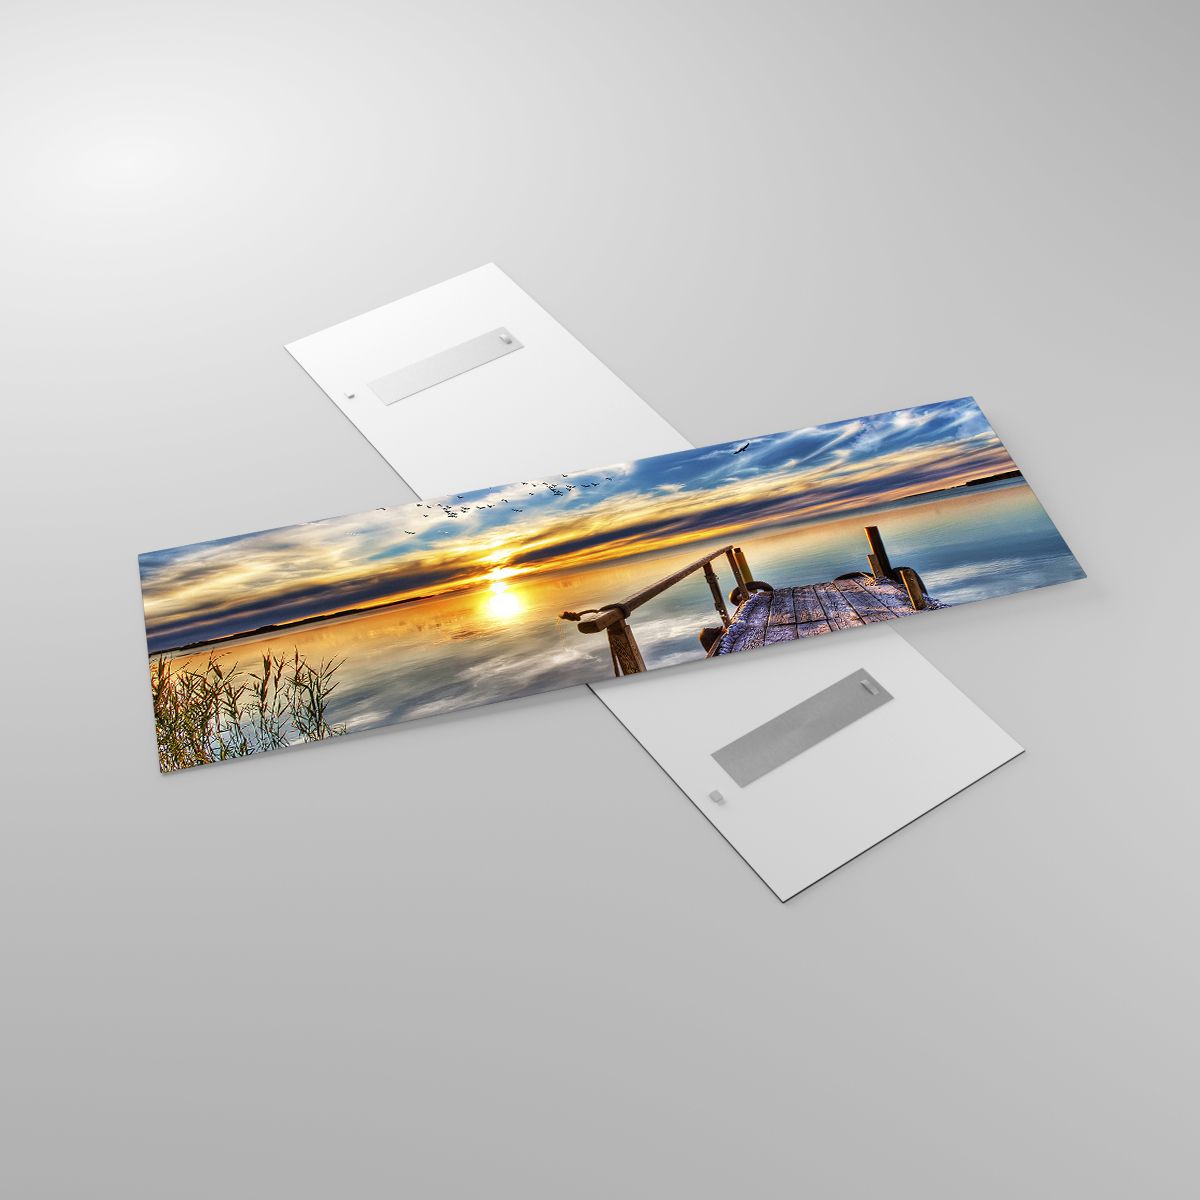 Glasbild Landschaft, Glasbild See, Glasbild Holzbrücke, Glasbild Der Sonnenuntergang, Glasbild Natur